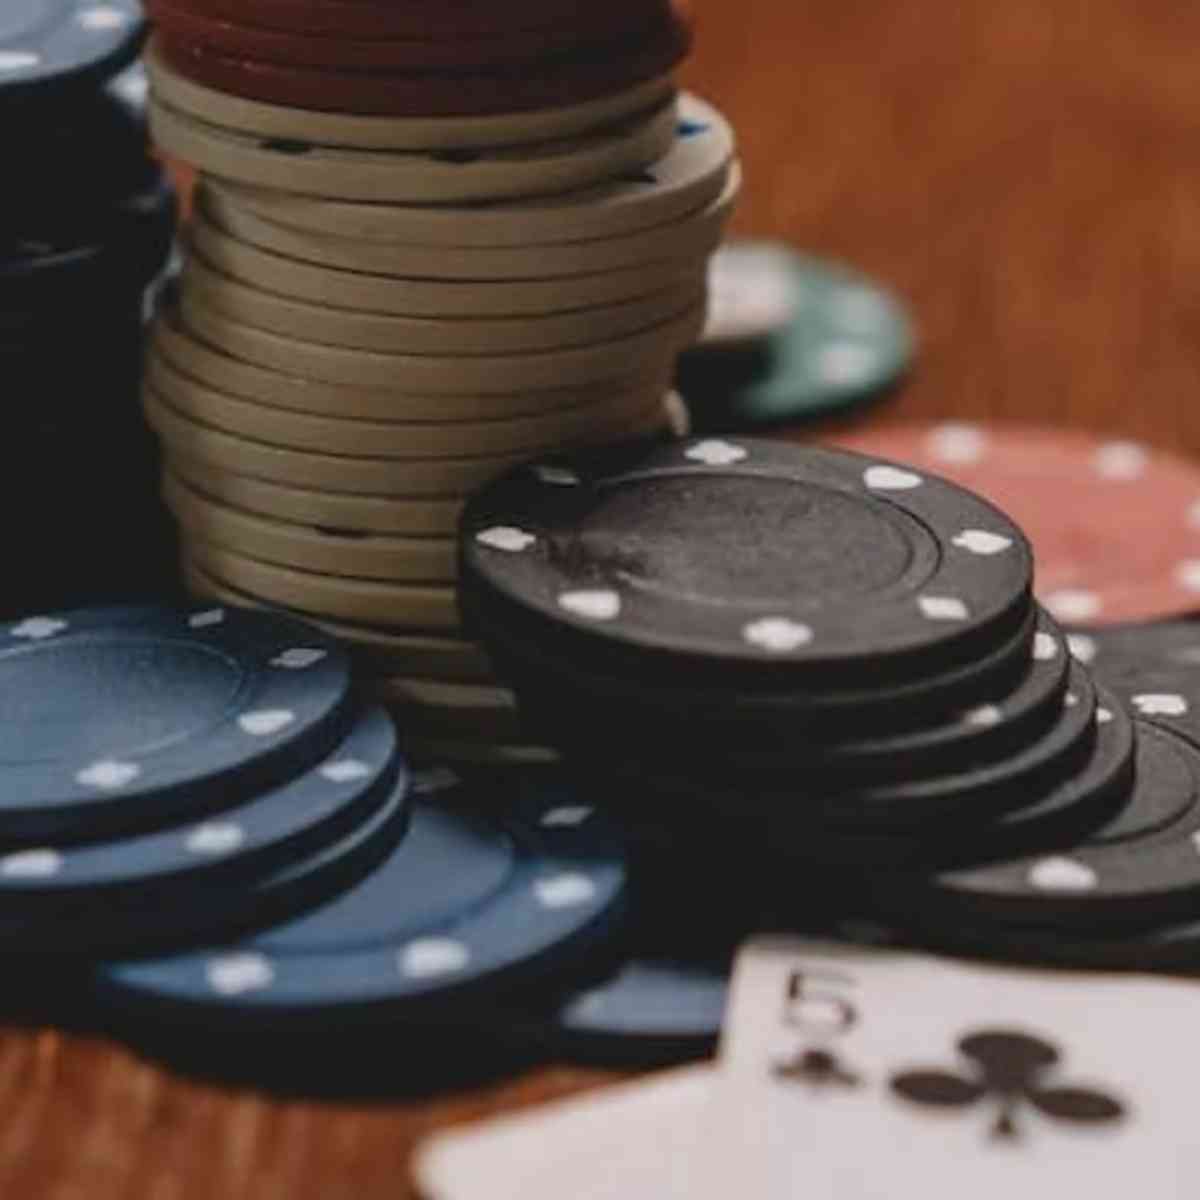 Como Jogar Poker Básico - Jornal de Brasília